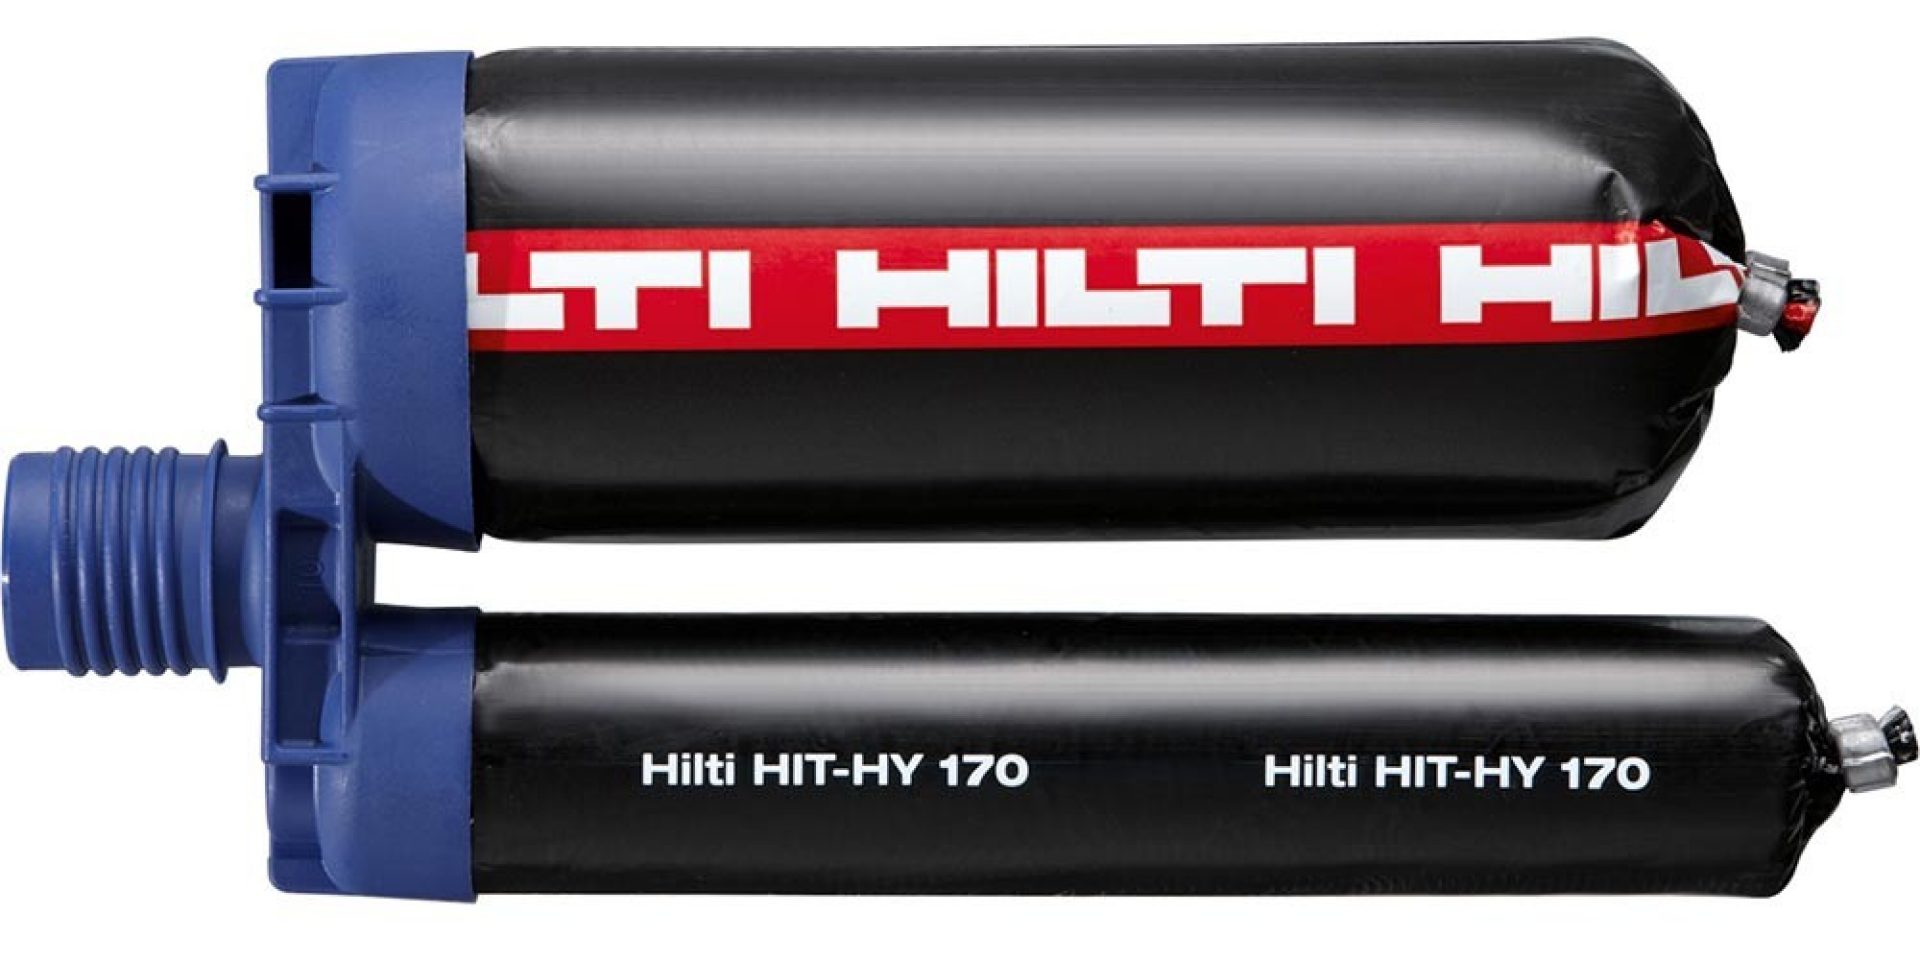 Hilti HIT-HY 170